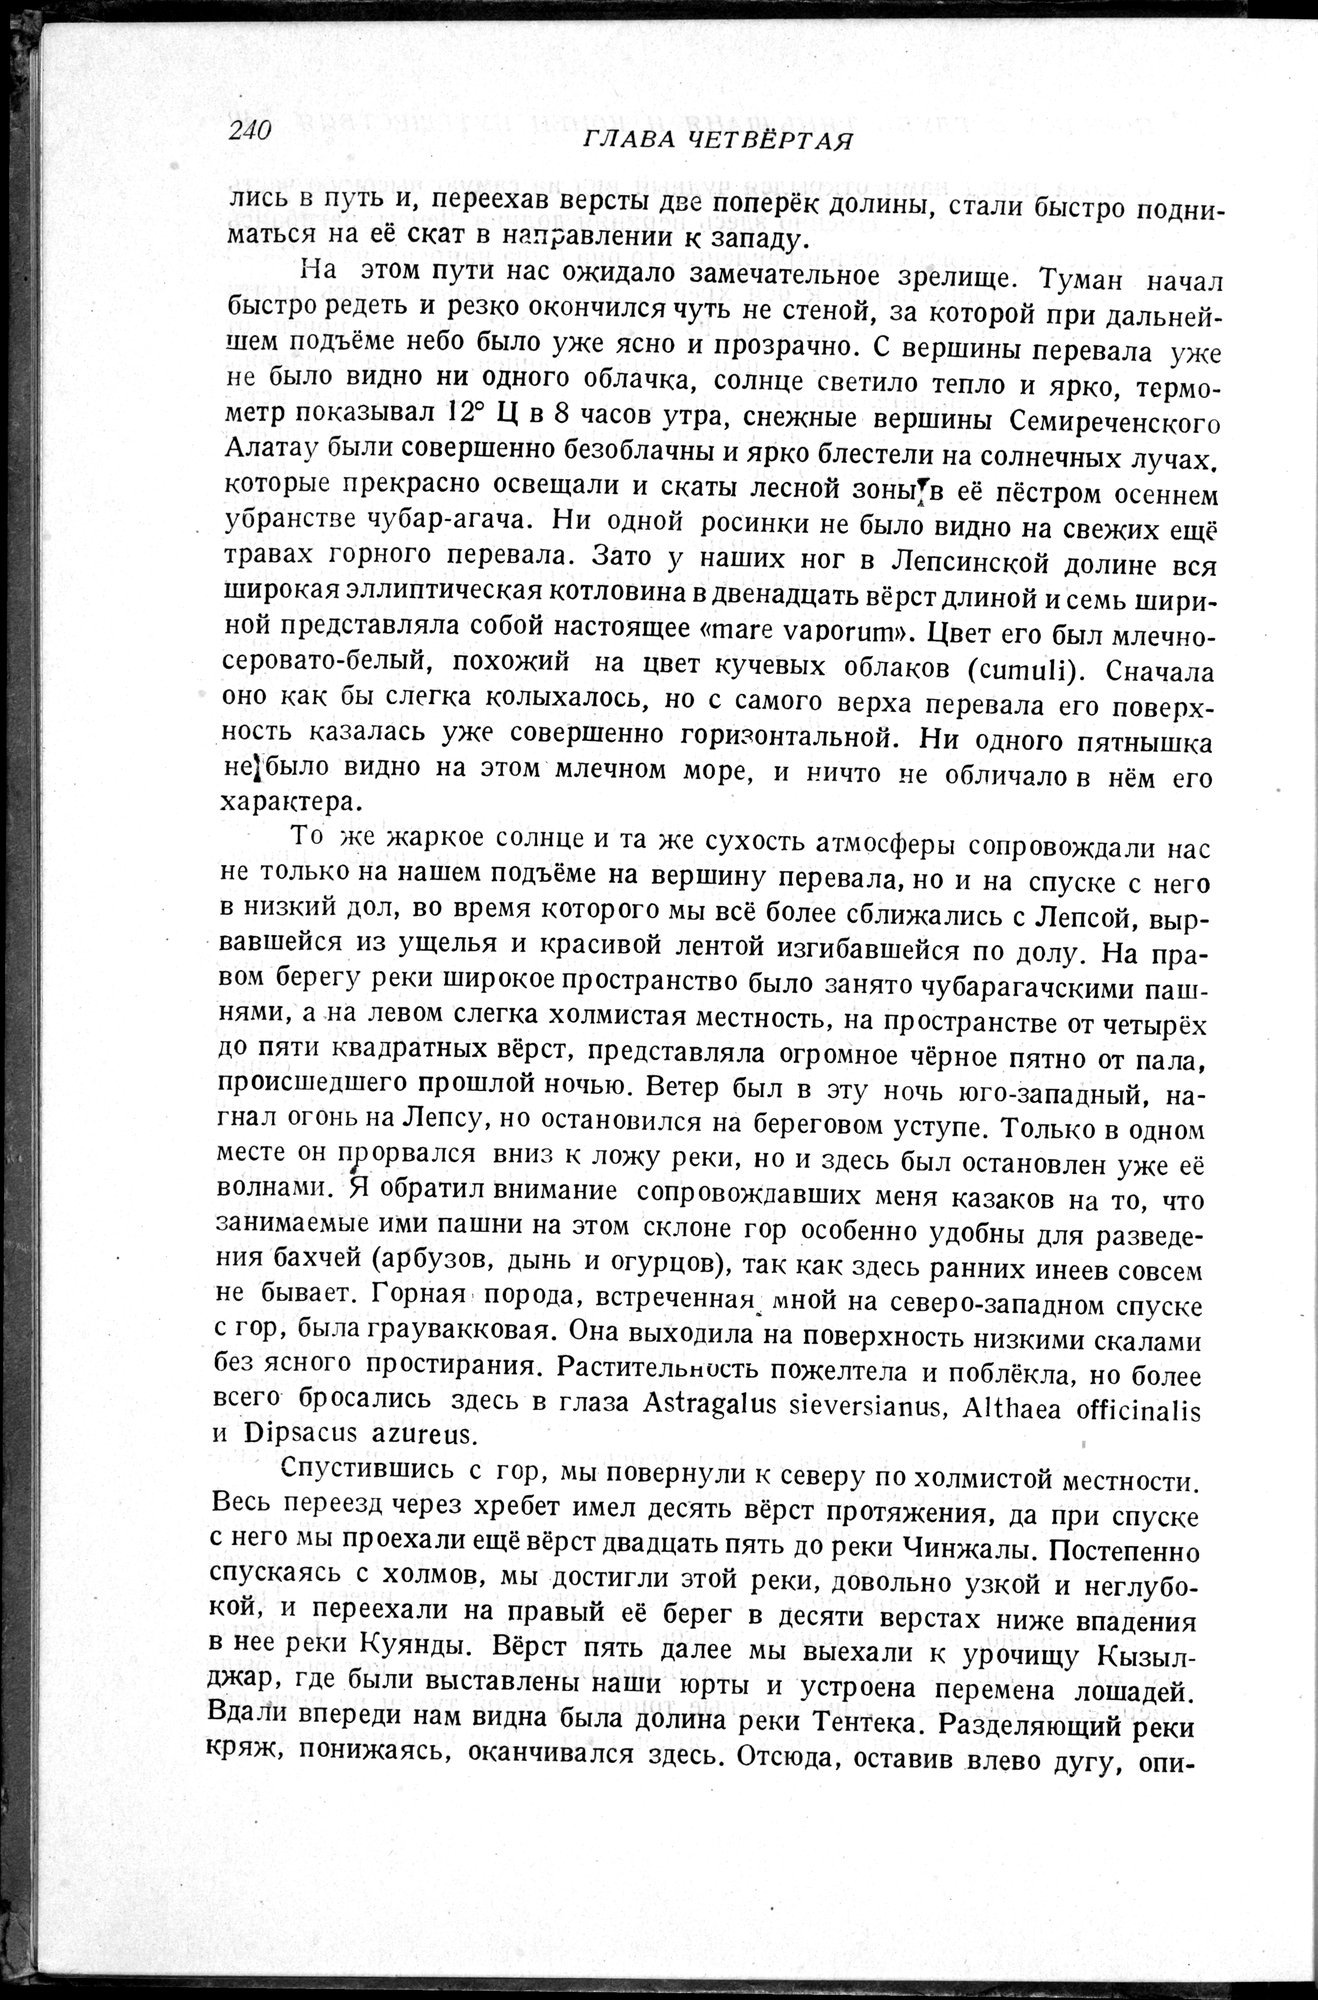 Puteshestvie v Tian' - Shan' v 1856-1857 godakh : vol.1 / Page 262 (Grayscale High Resolution Image)